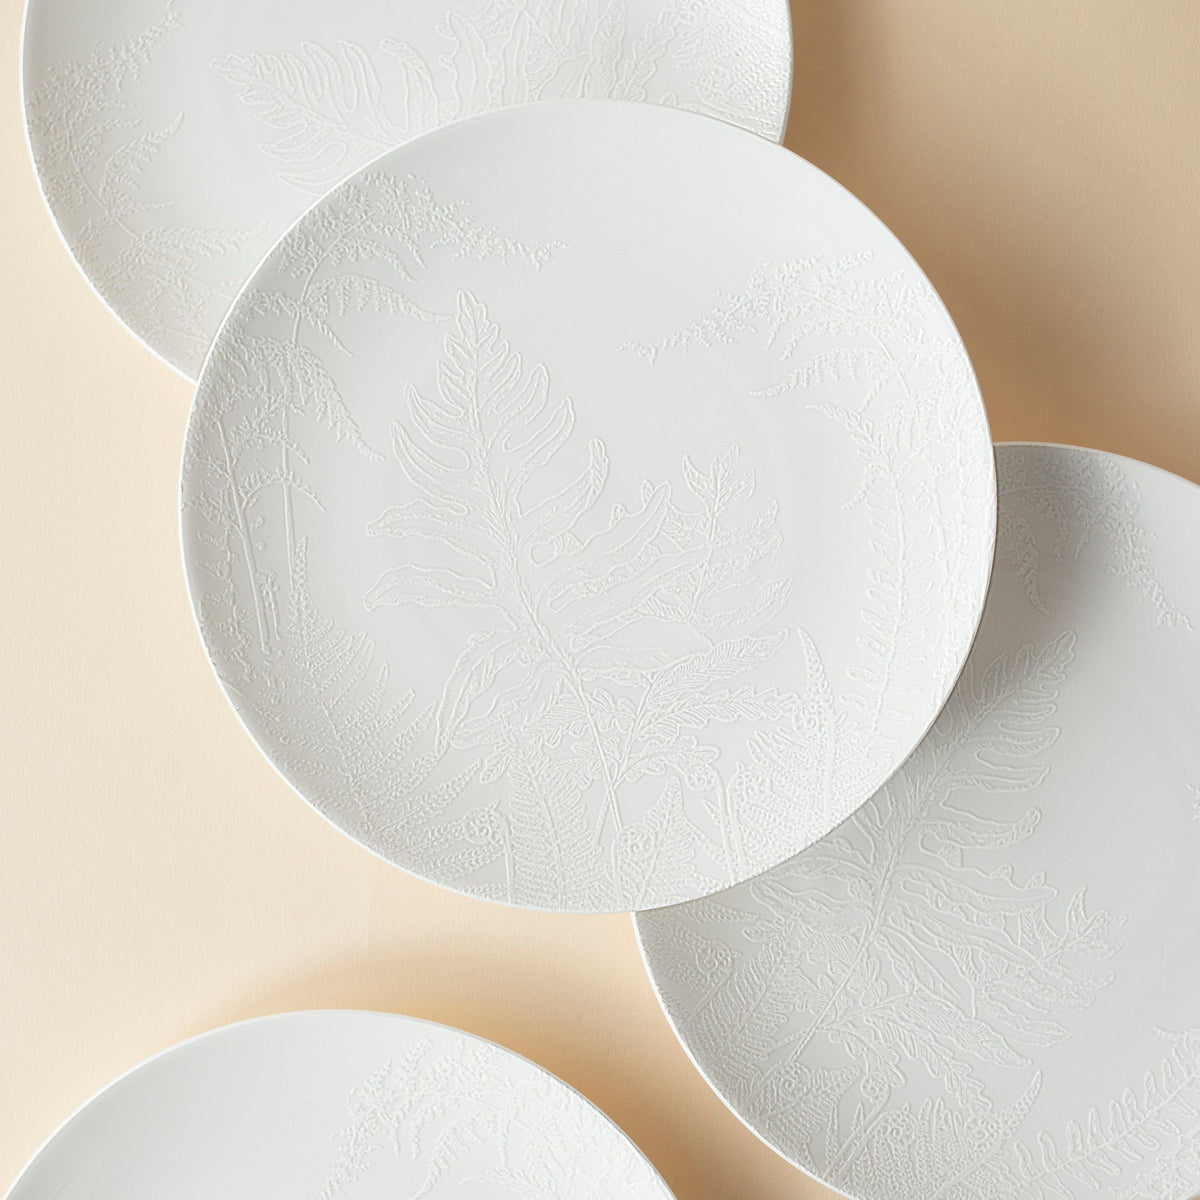 Four small porcelain Spring White Canapé plates with Caskata Artisanal Home pattern designs.